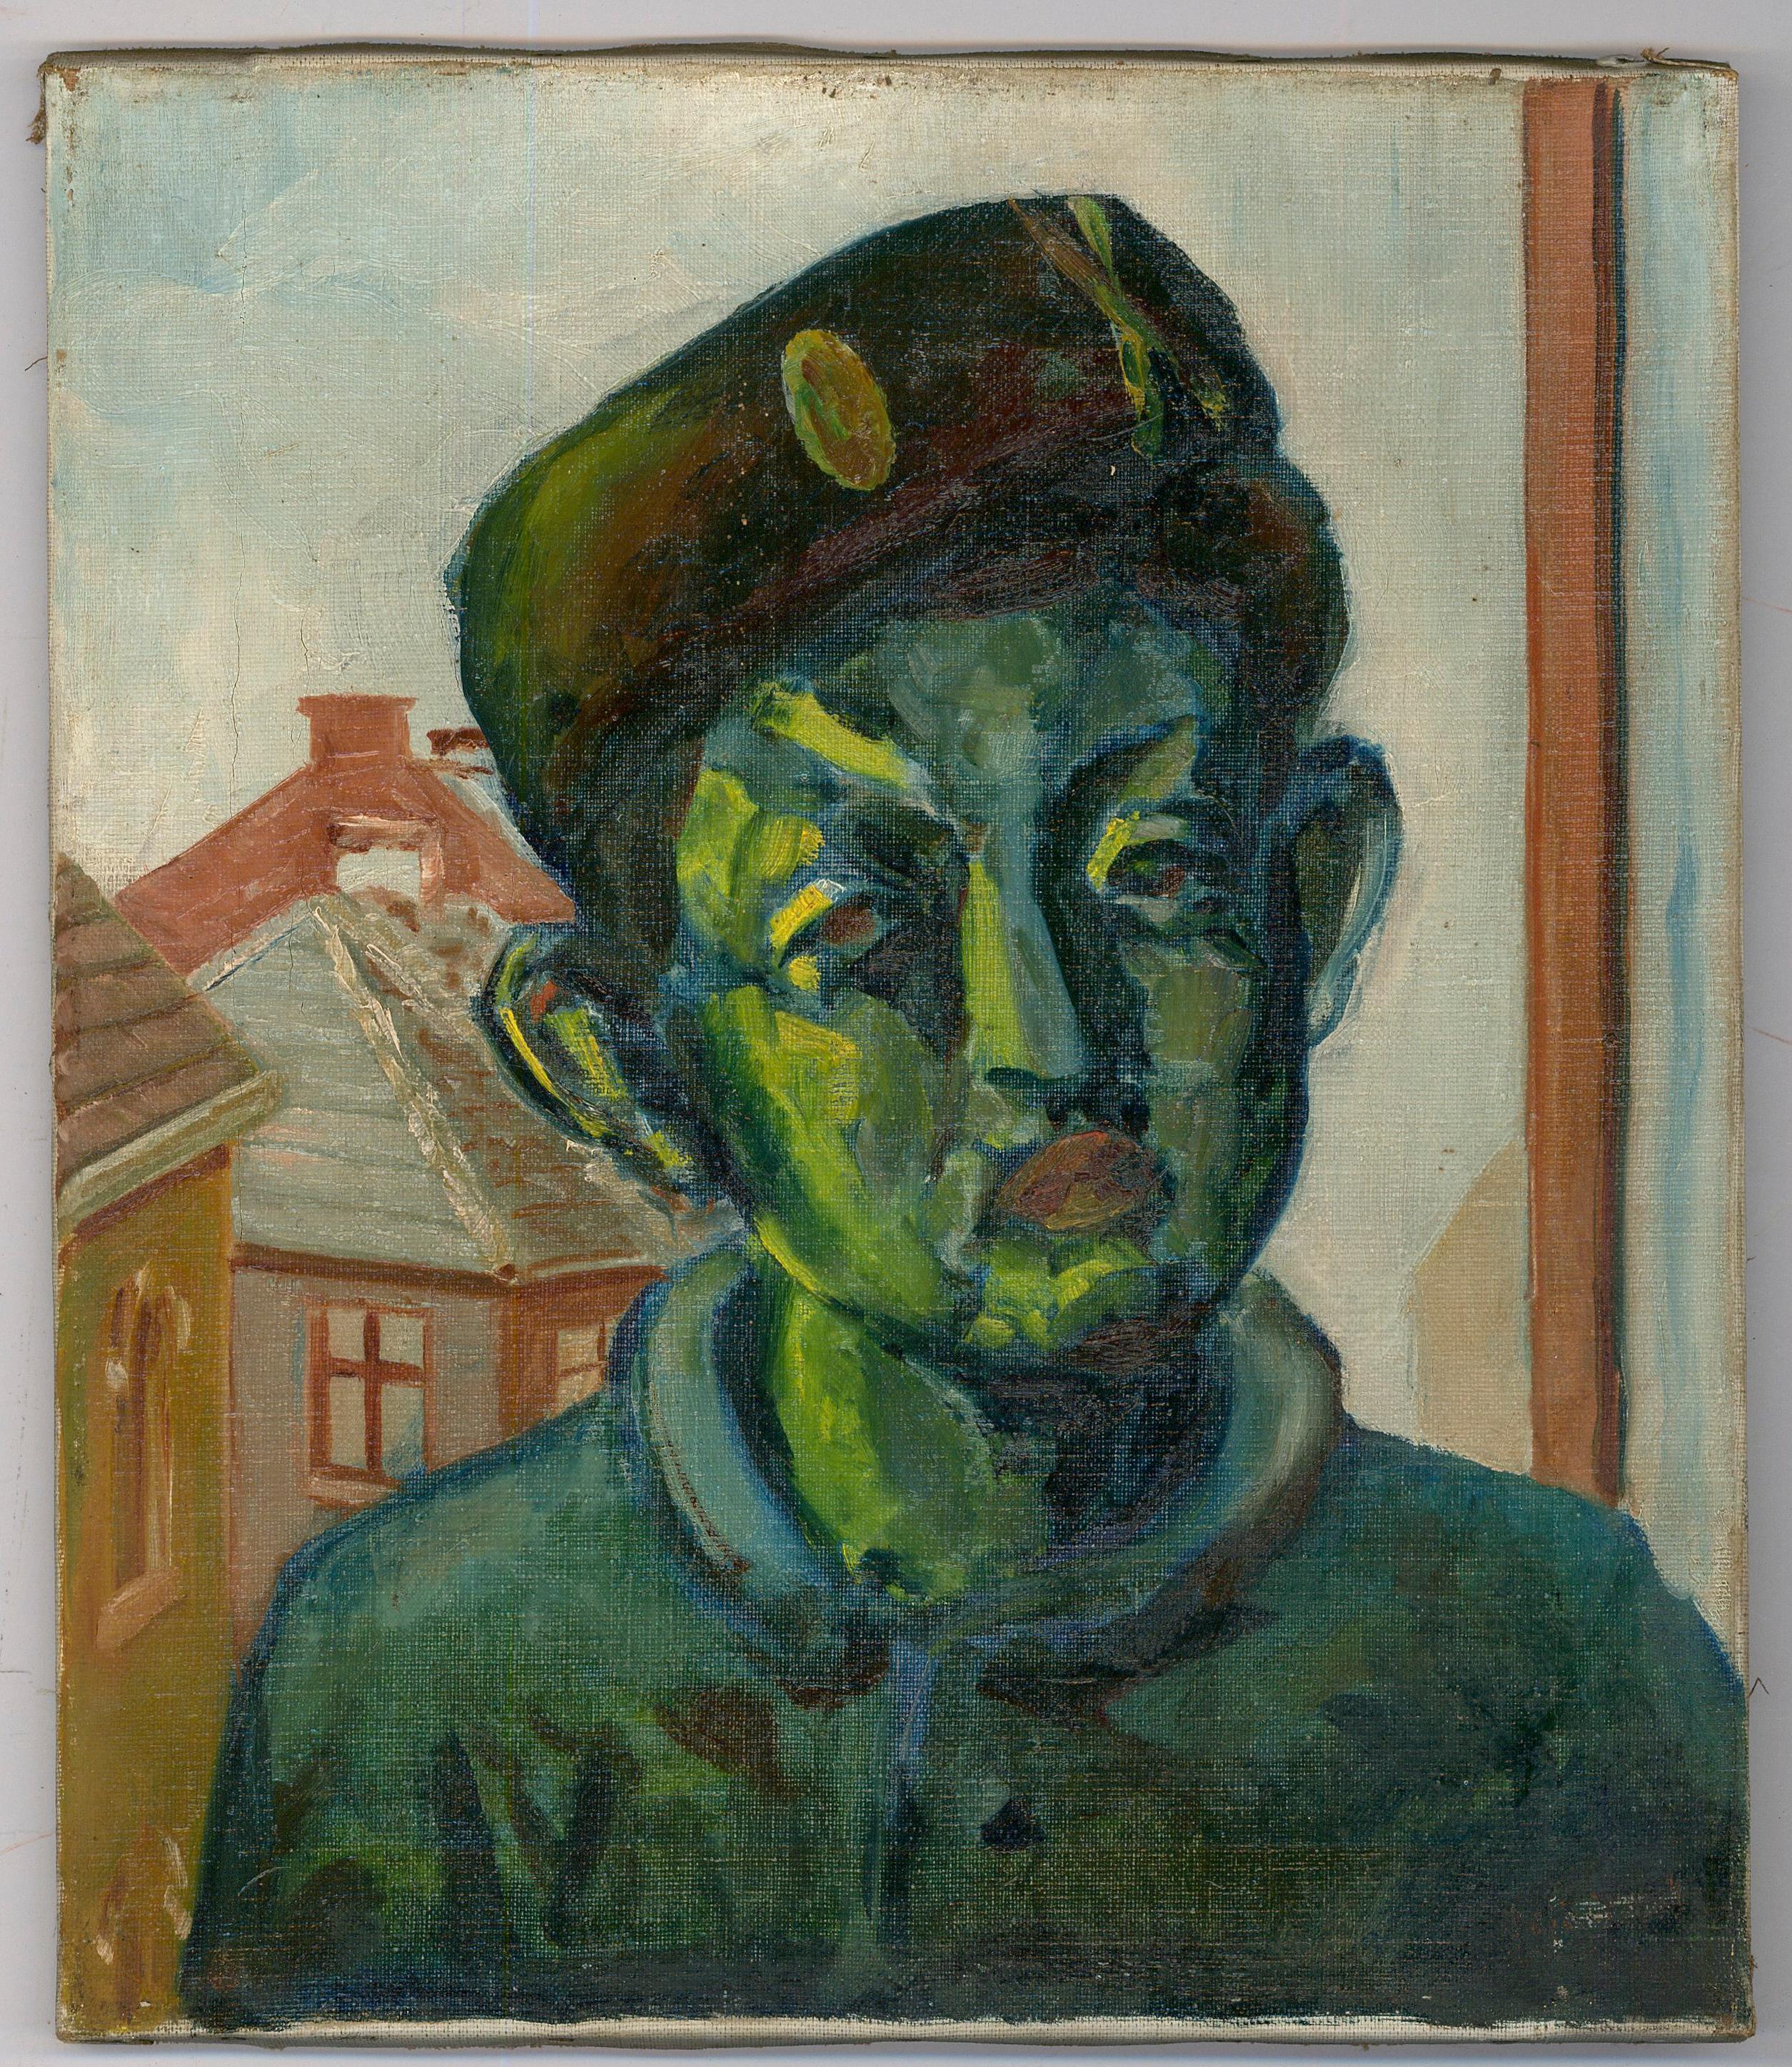 Unknown Portrait Painting - Mid 20th Century Oil - School Boy In Green